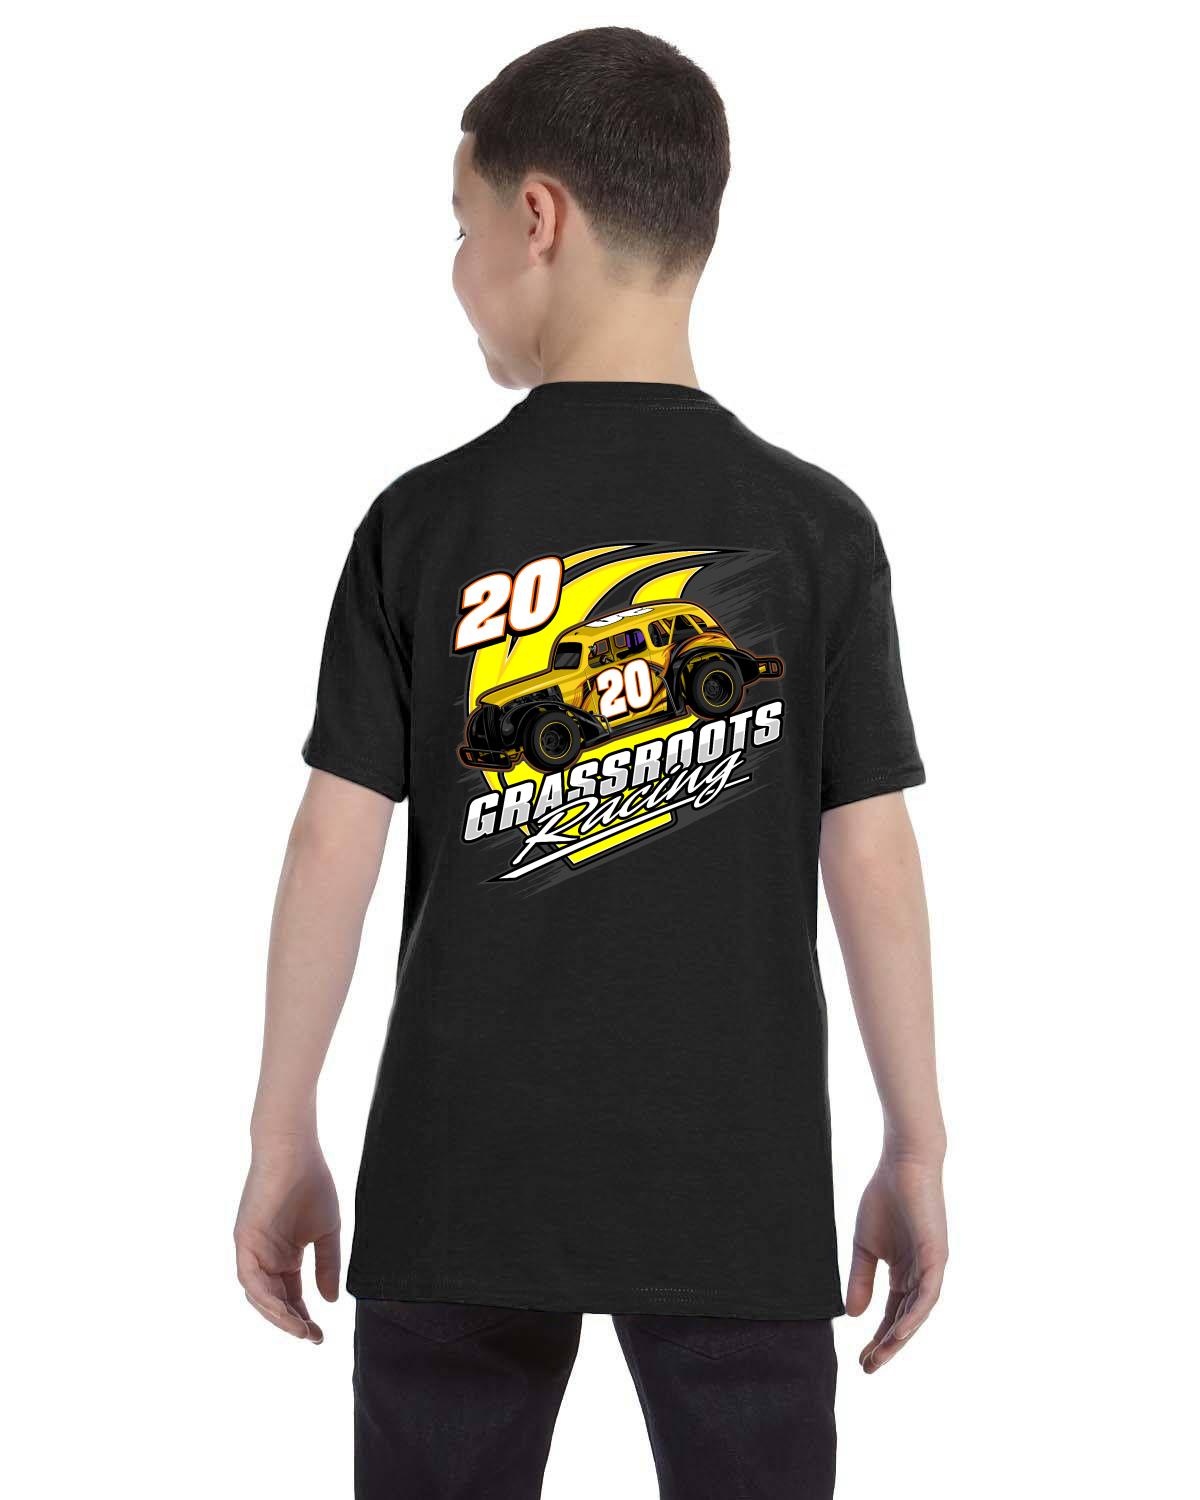 Cole McFadden / Grassroots Racing Youth tshirt